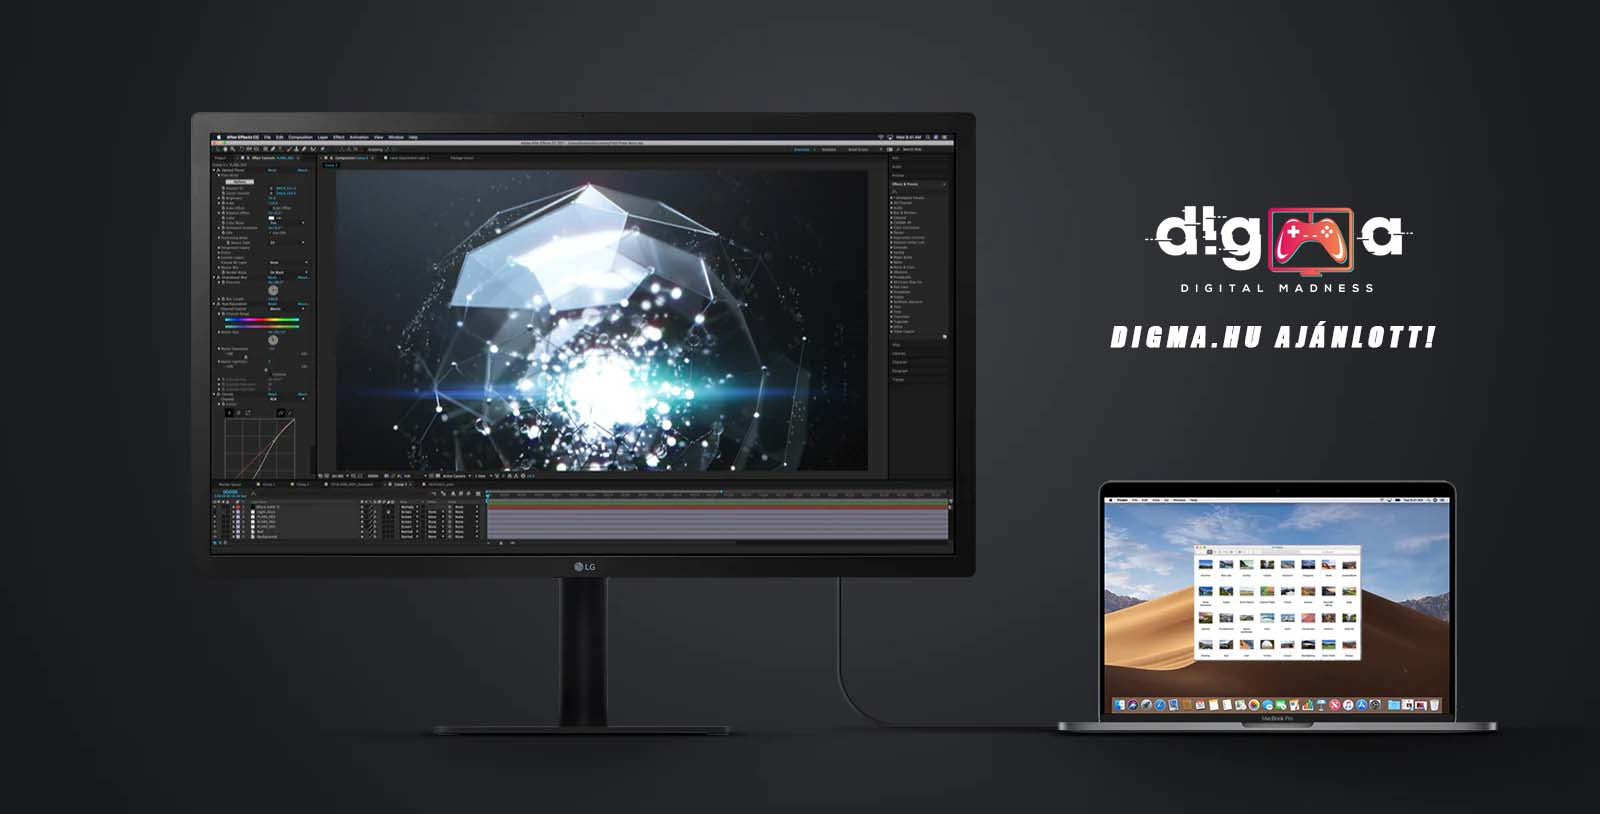 LG UltraFine monitor MacBookhoz csatlakoztatva, digma.hu